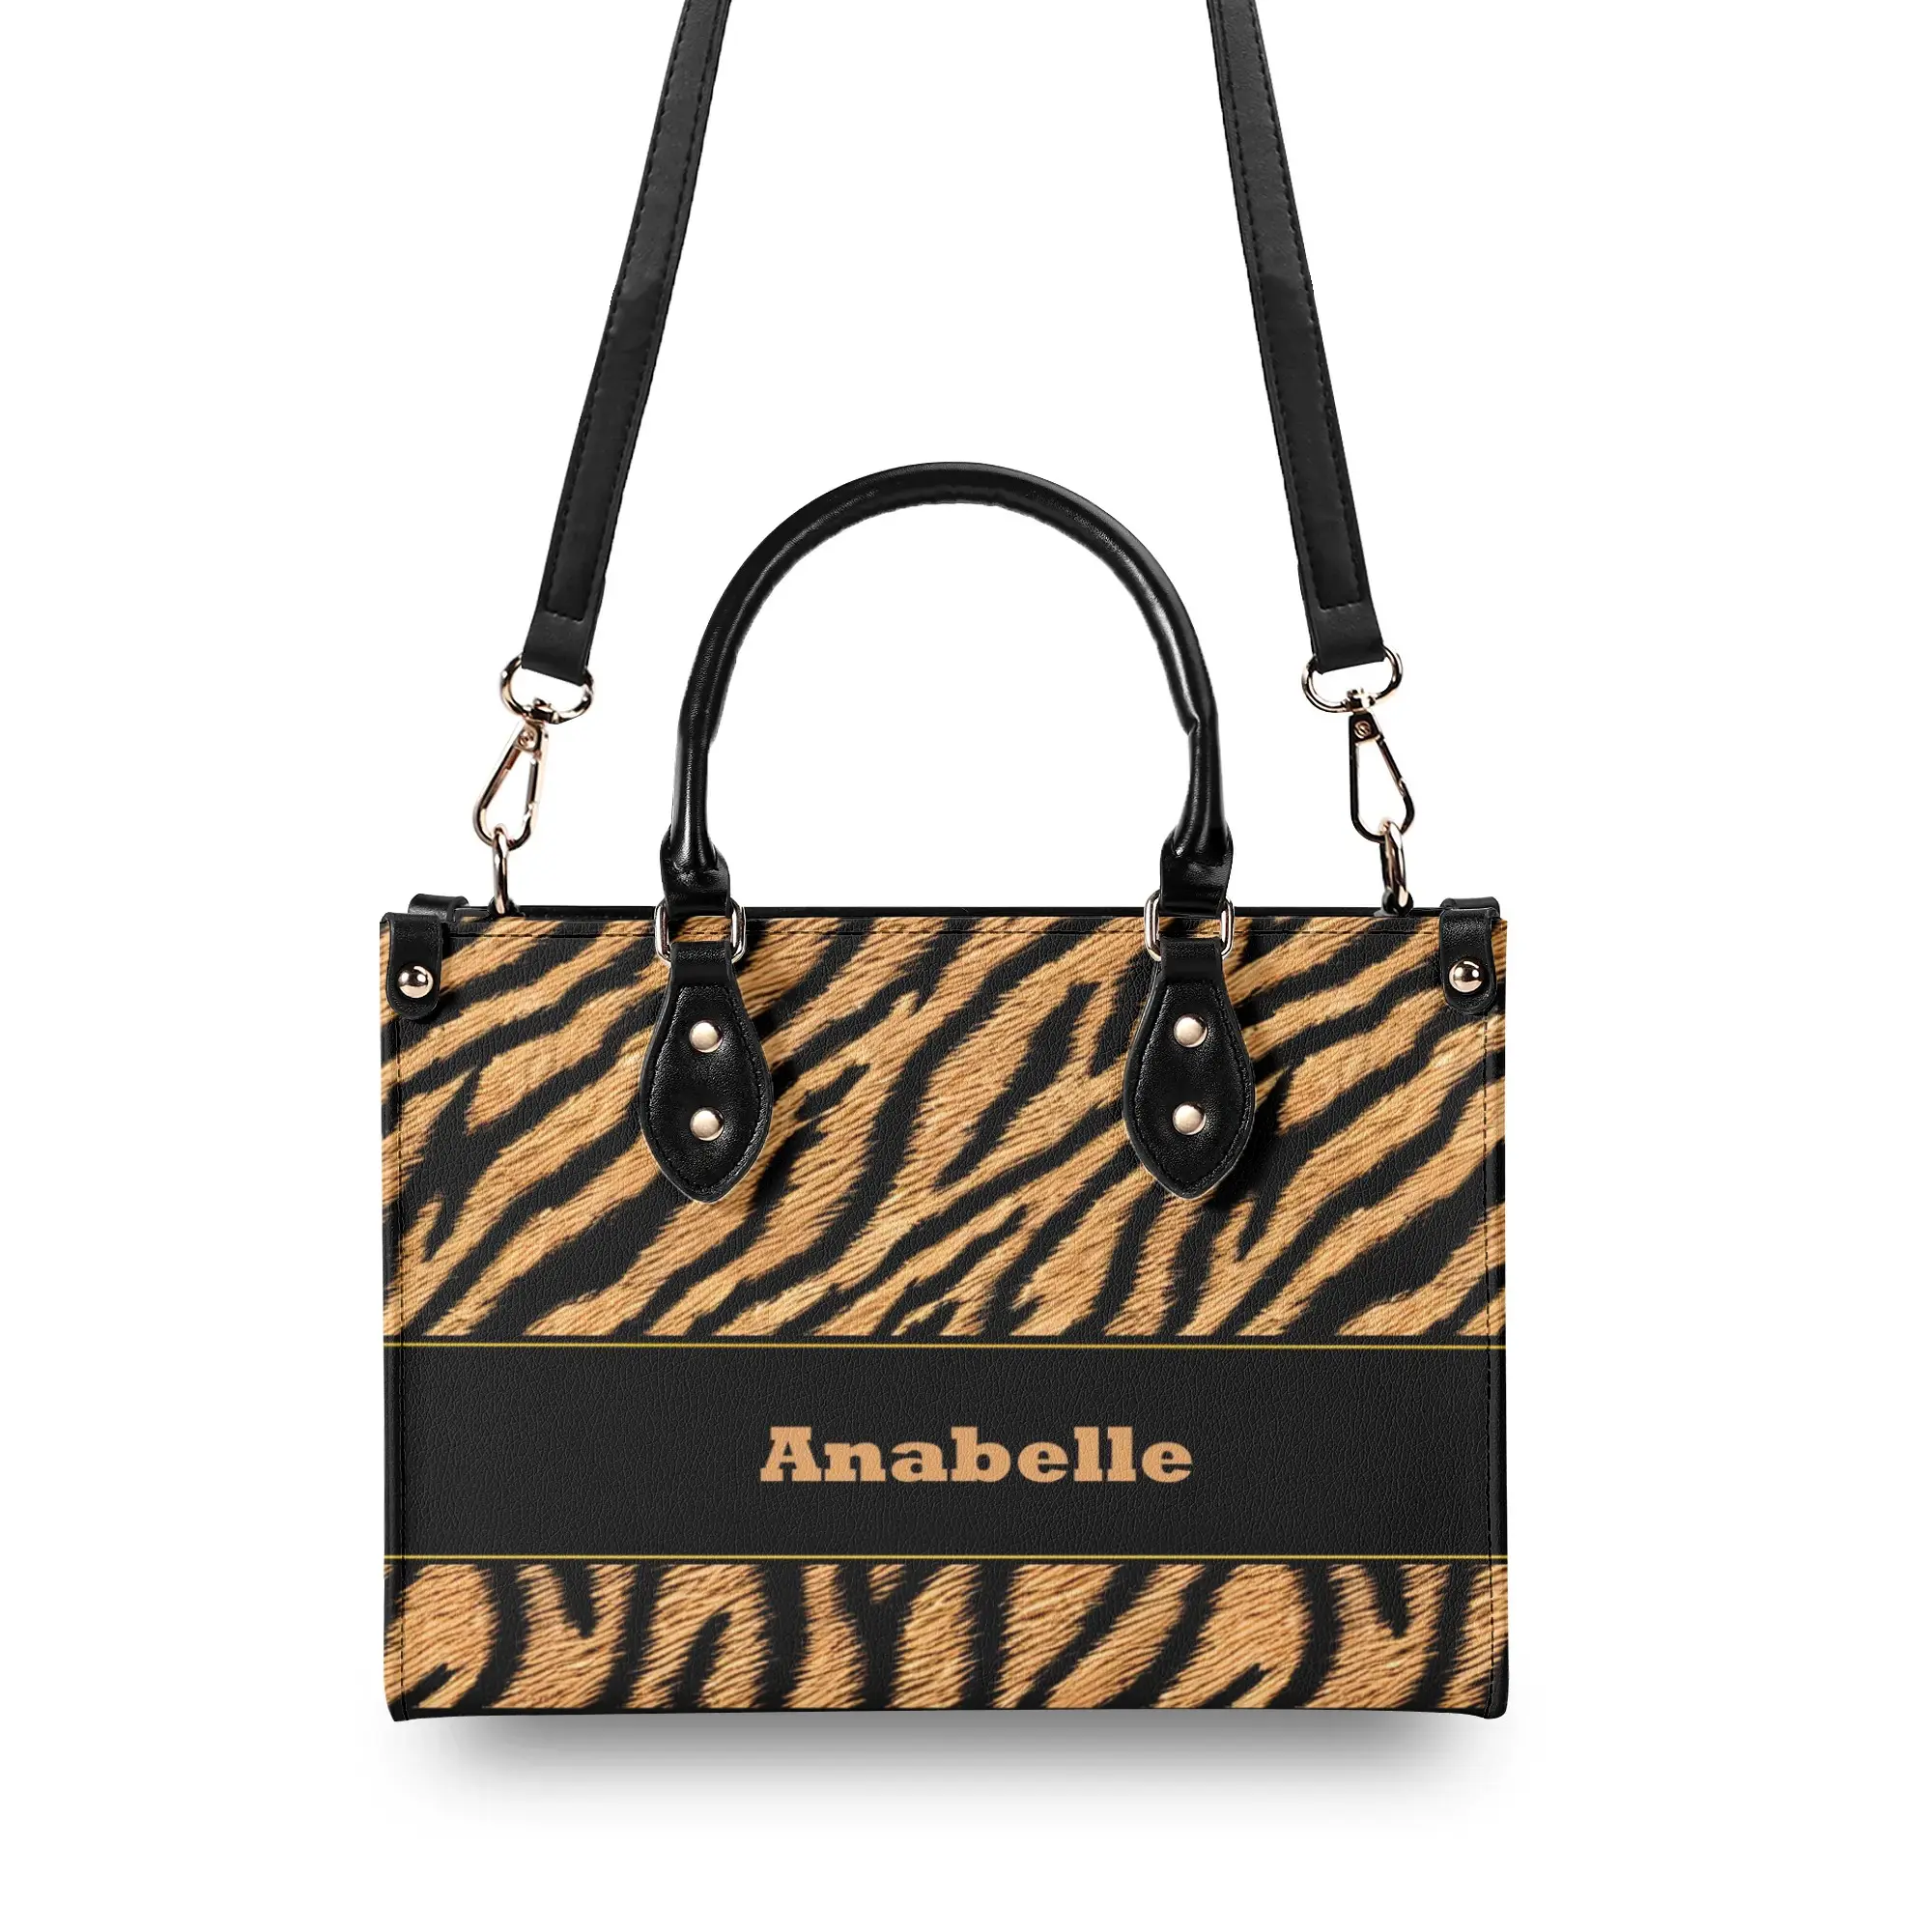 Personalized Leather Handbag Tiger